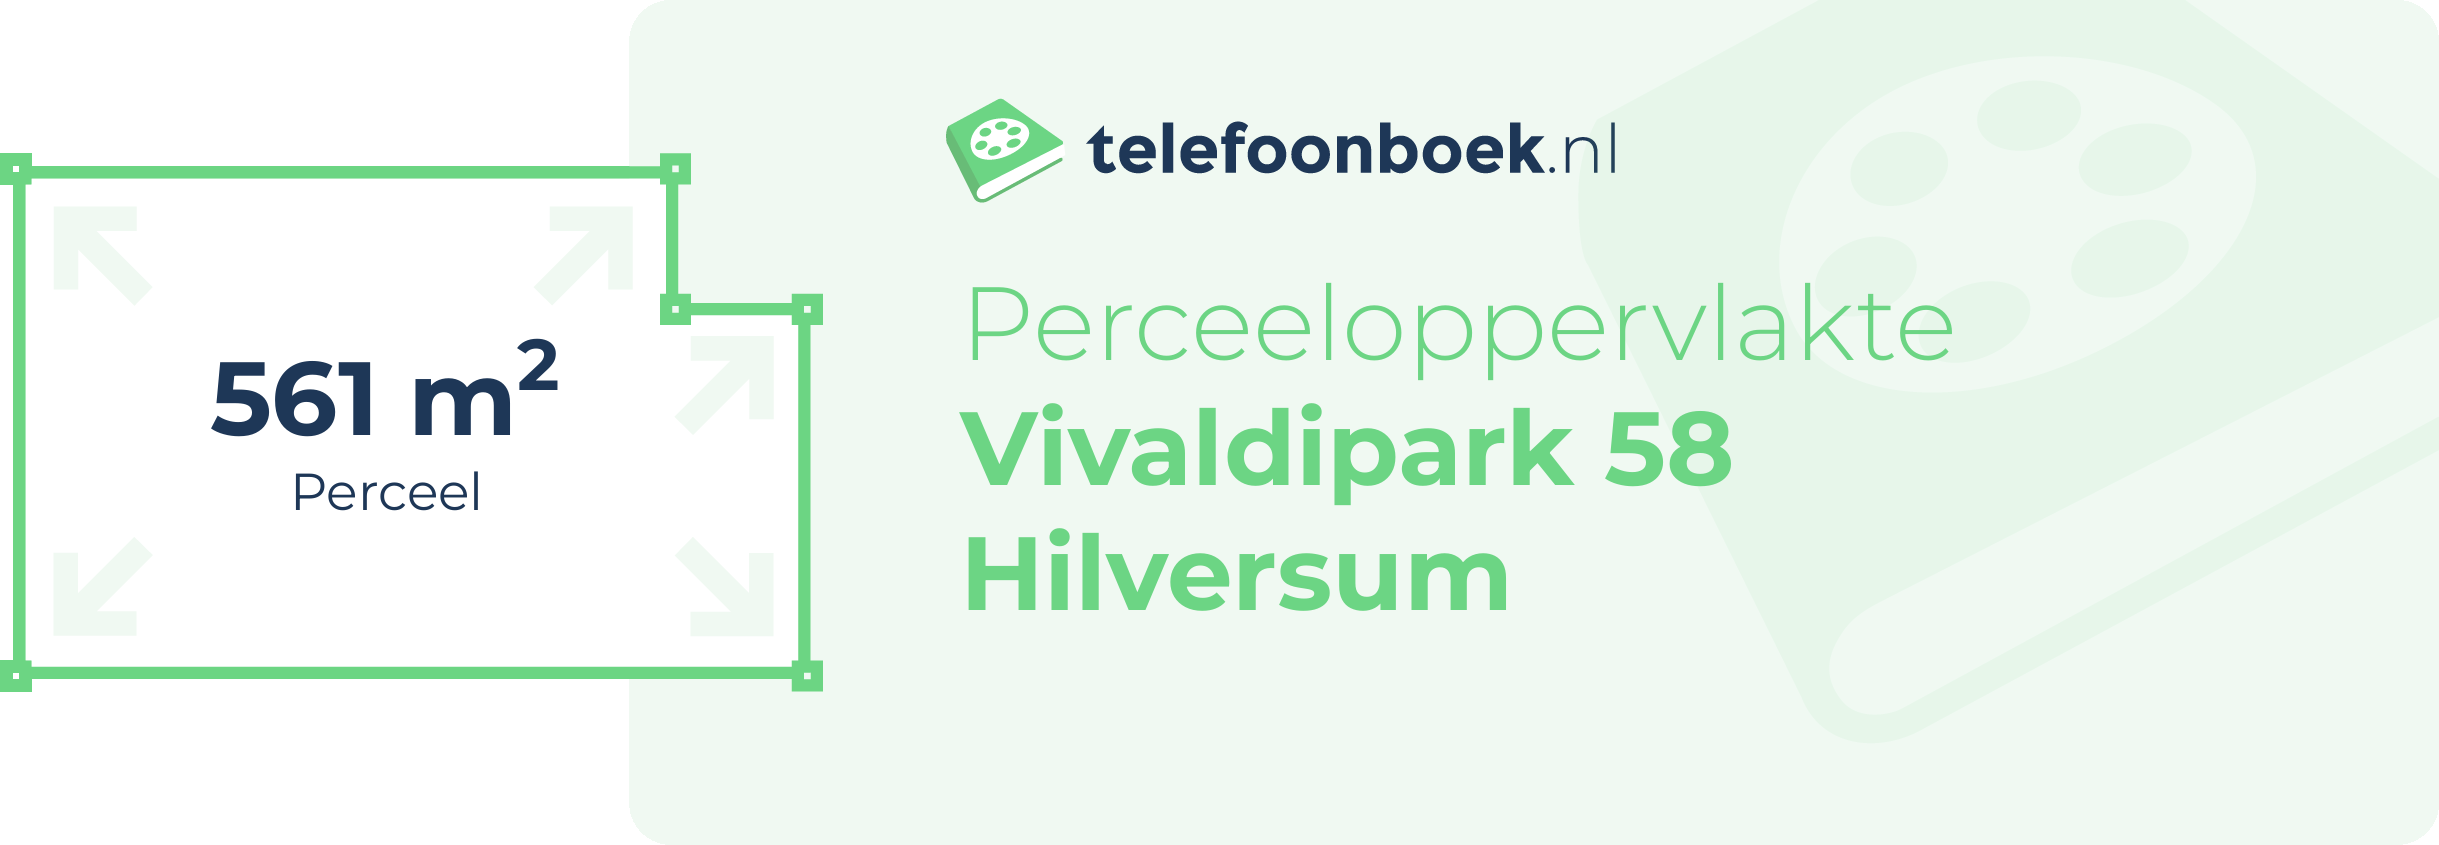 Perceeloppervlakte Vivaldipark 58 Hilversum